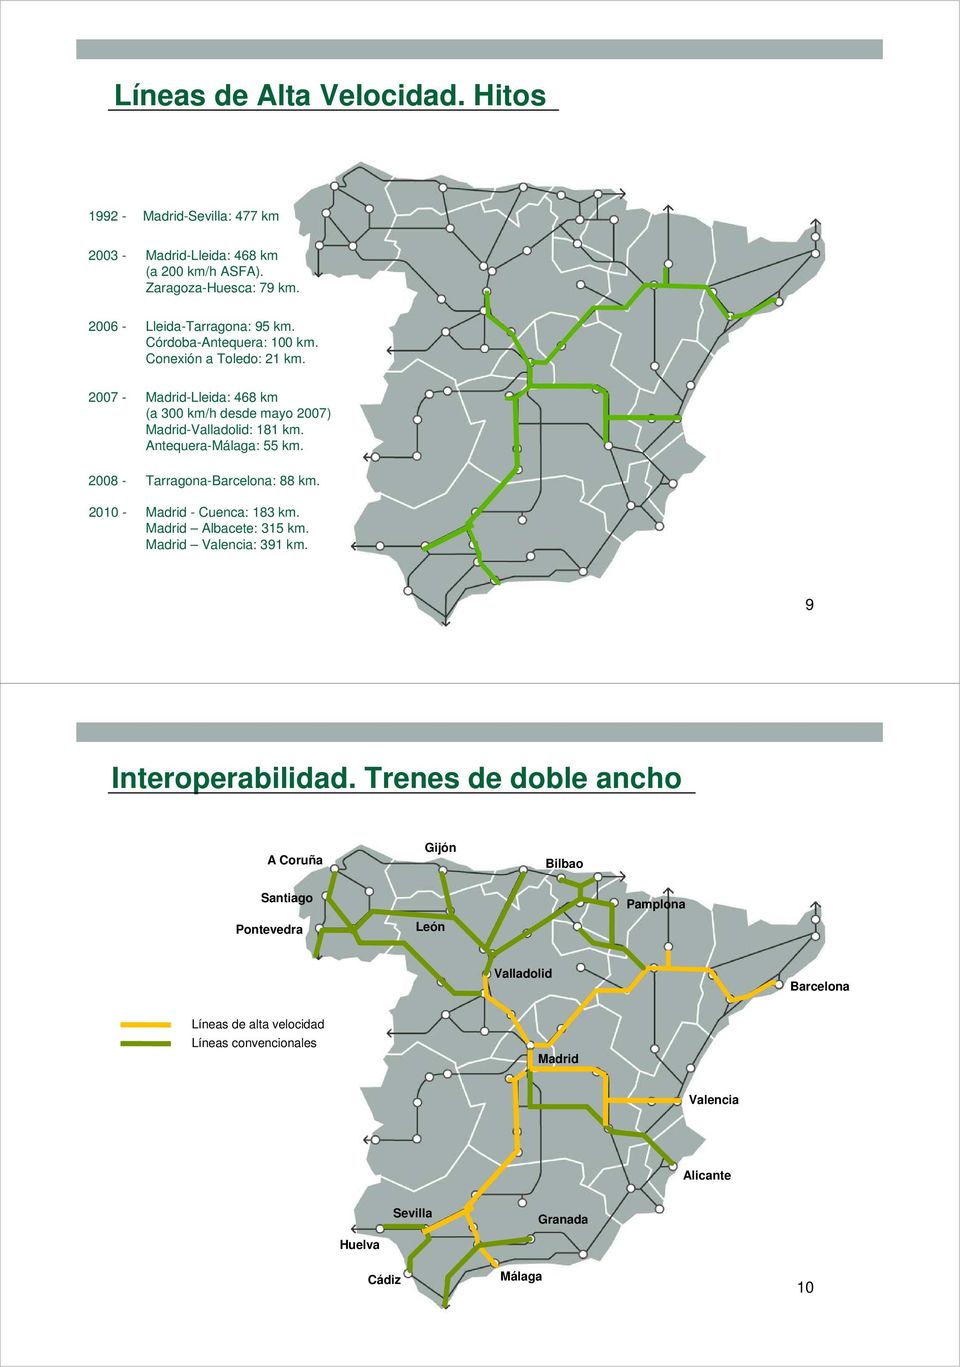 2008 - Tarragona-Barcelona: 88 km. 2010 - Madrid - Cuenca: 183 km. Madrid Albacete: 315 km. Madrid Valencia: 391 km. 9 Interoperabilidad.